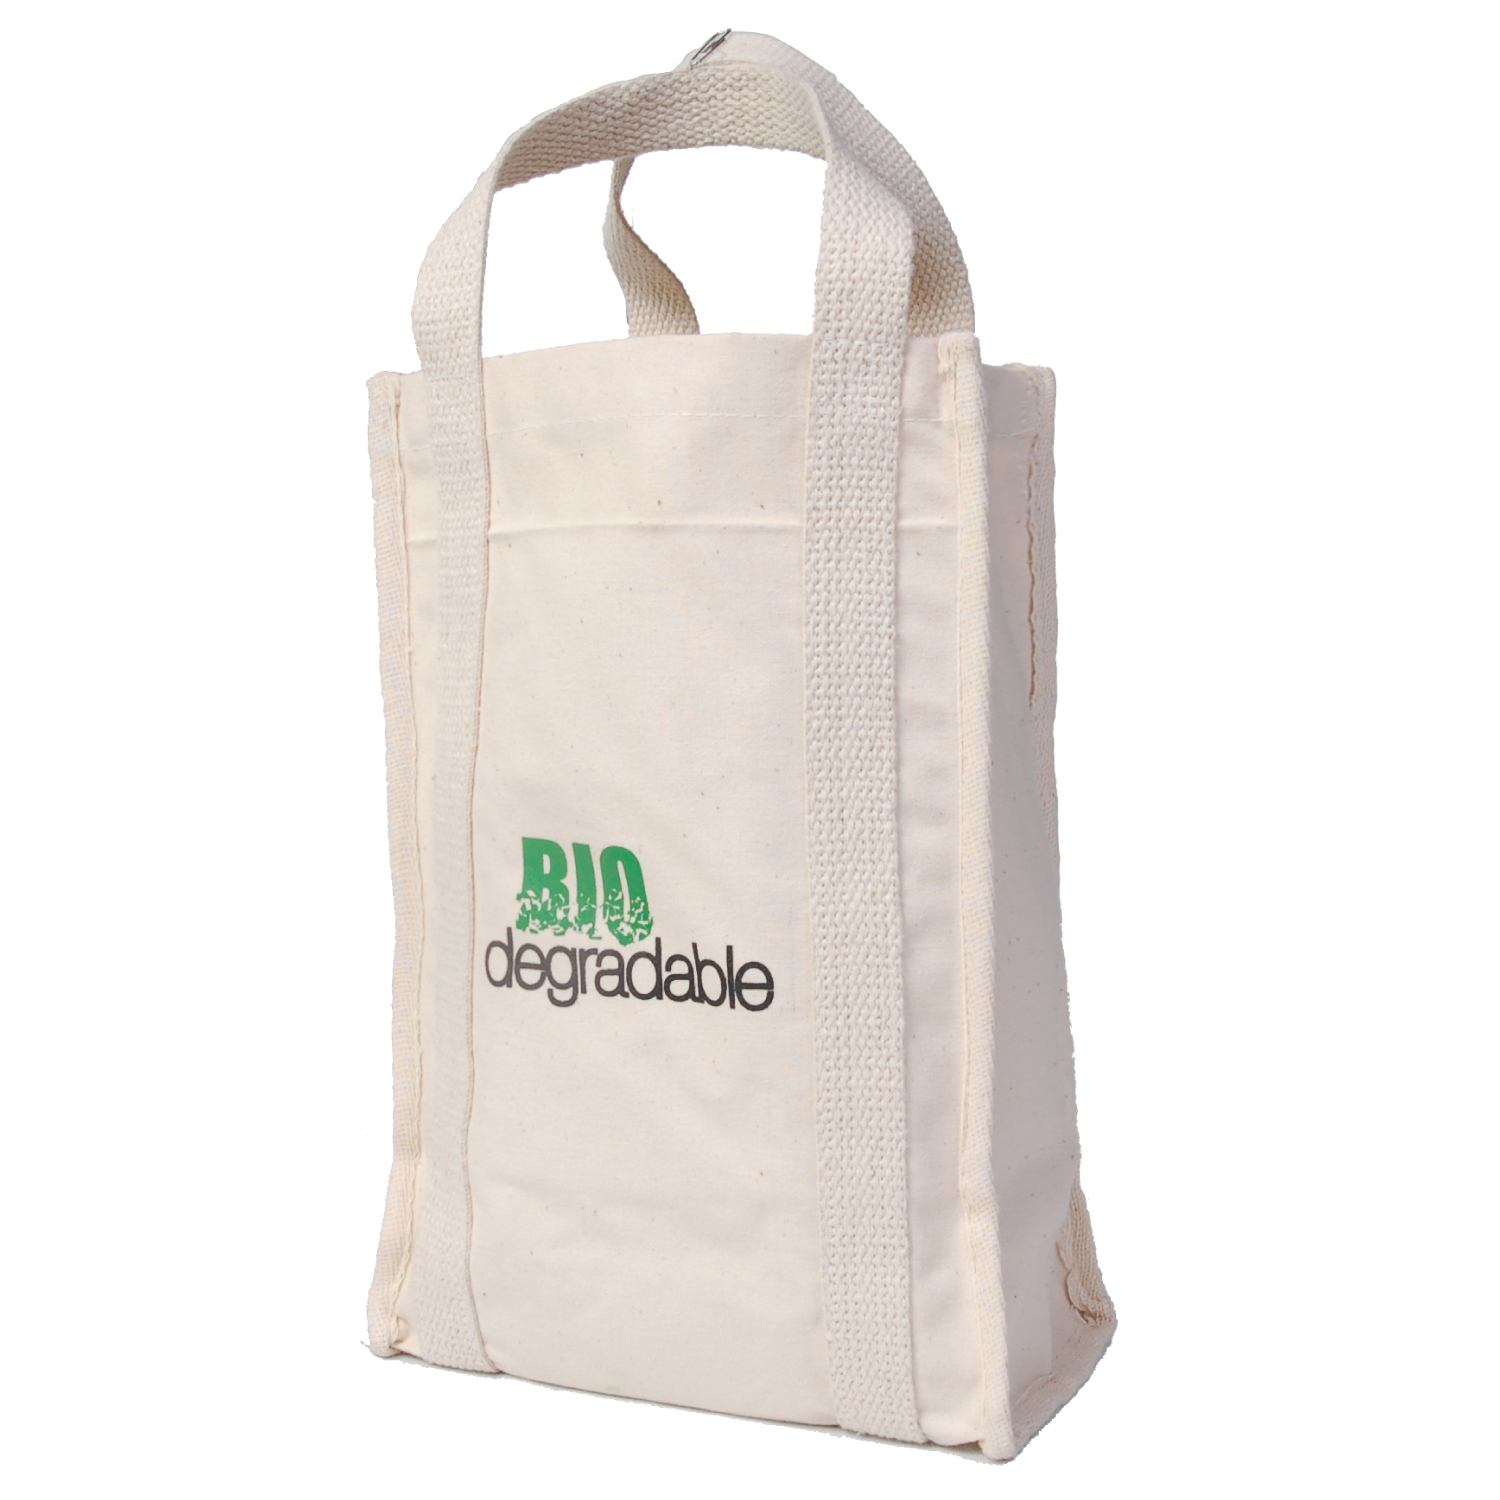 The eco-friendly Gar's Bodega bag | Tote Bag